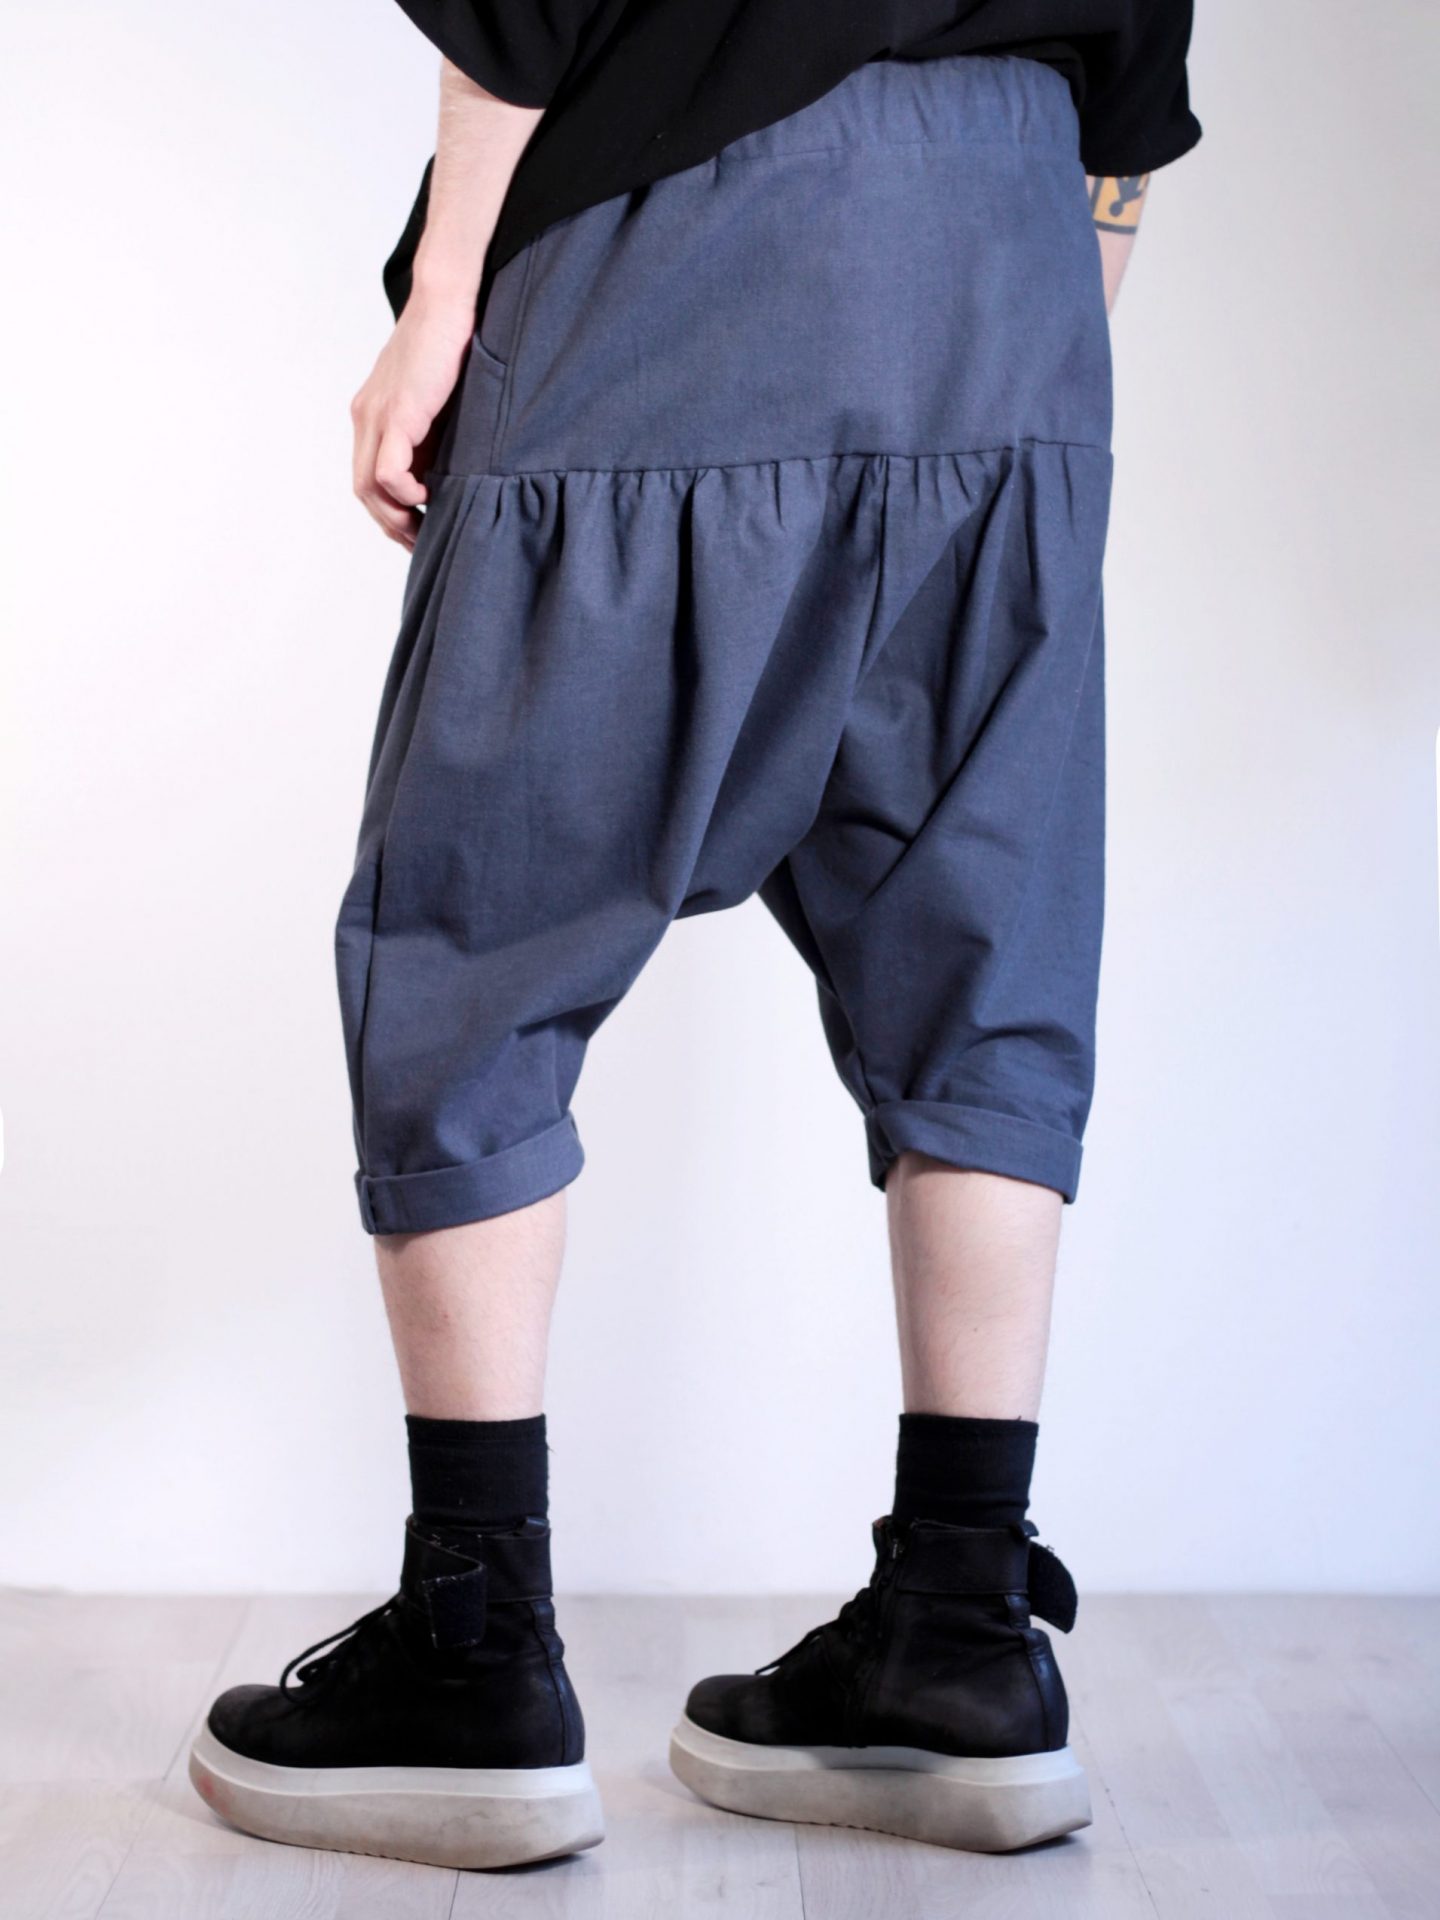 Navy cotton shorts